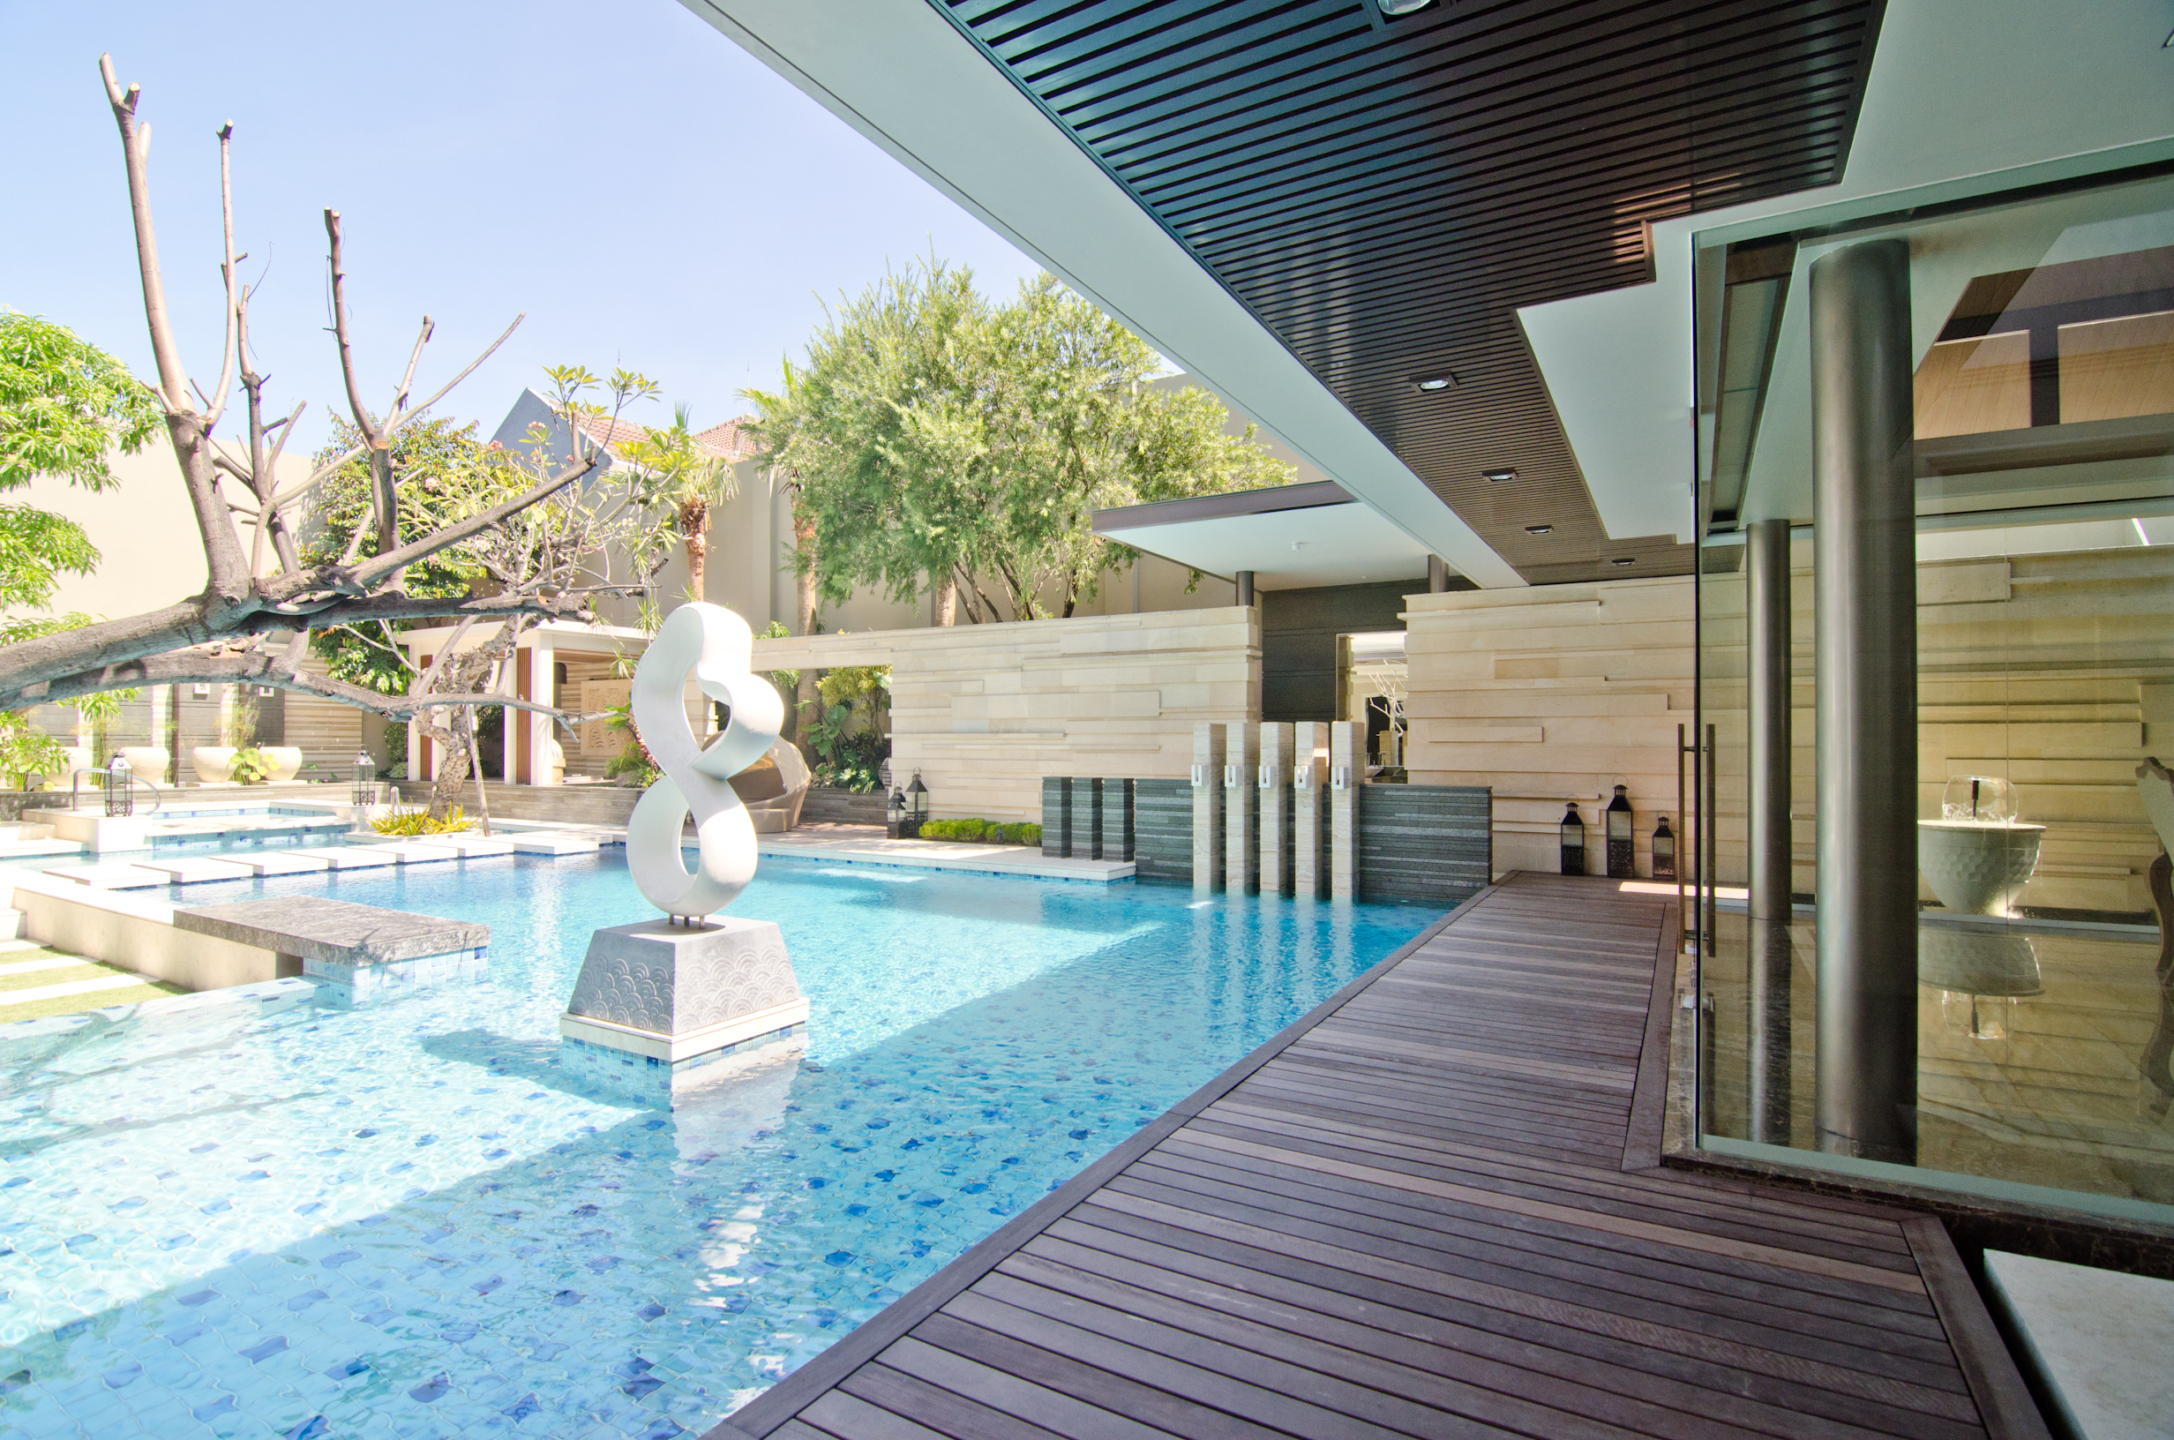 Seminar Hotel DeVasa Surabaya terrasse bois piscine